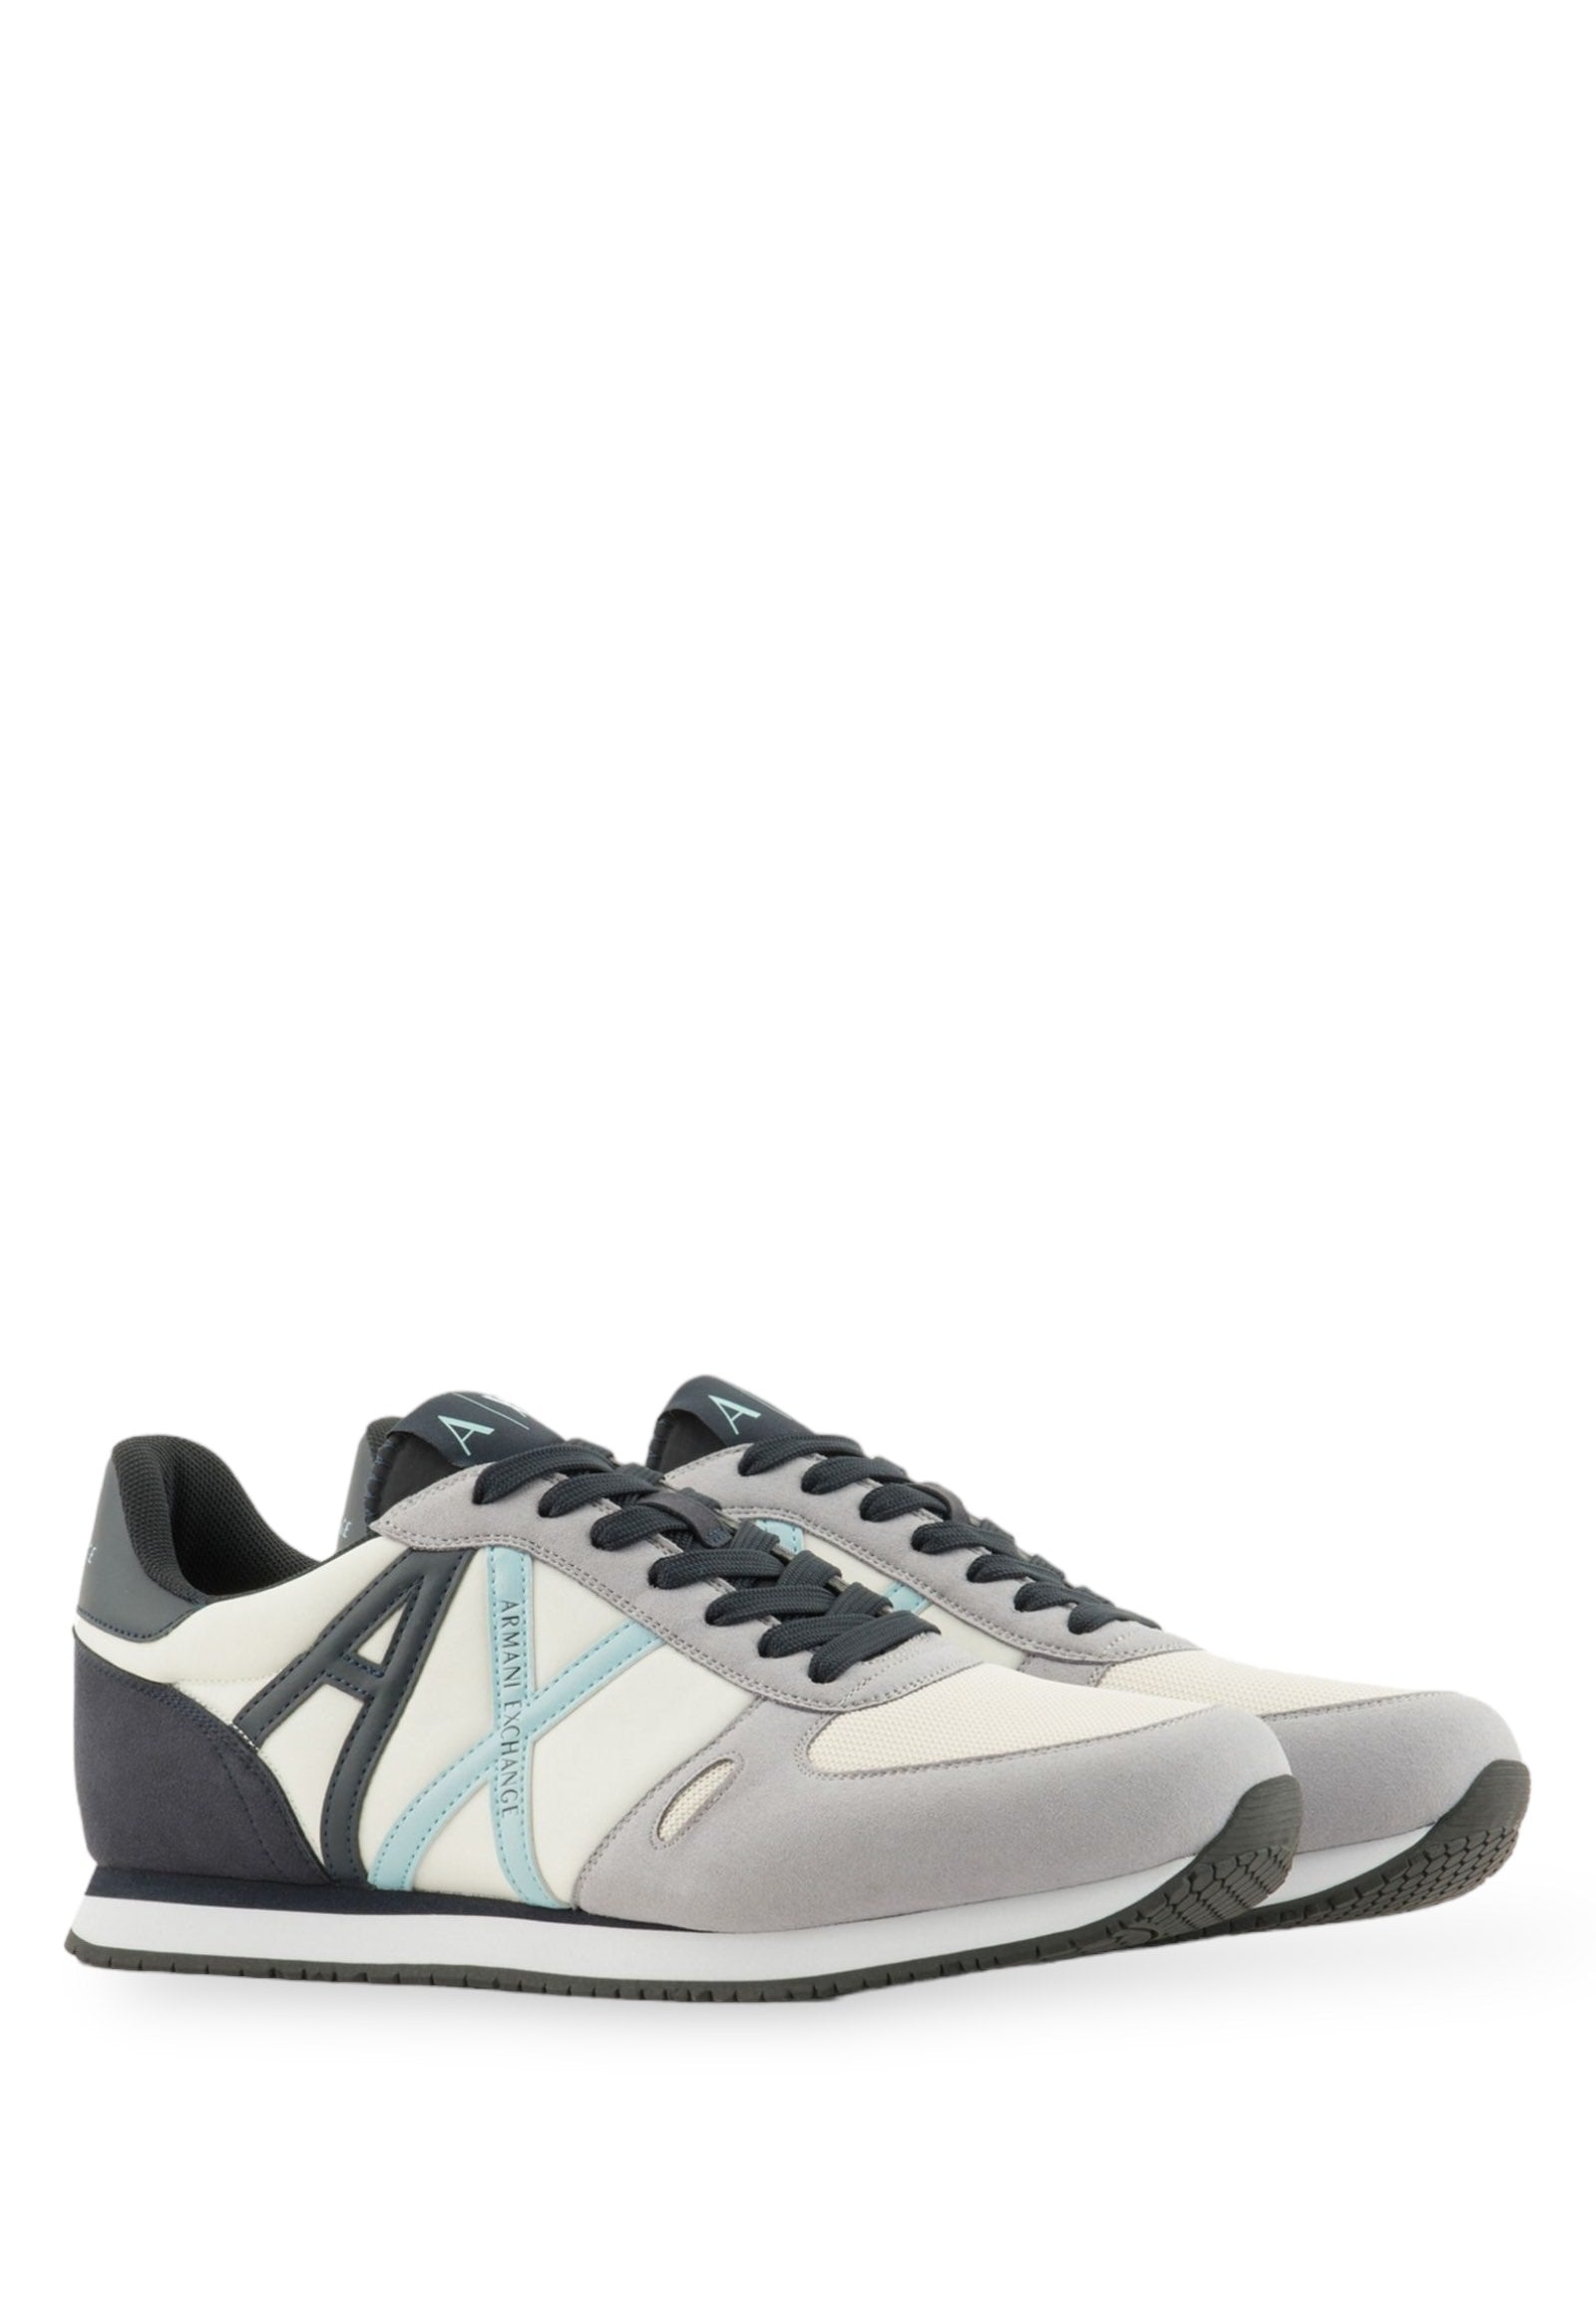 Sneakers Xux017 Navy, Optic White, Grey